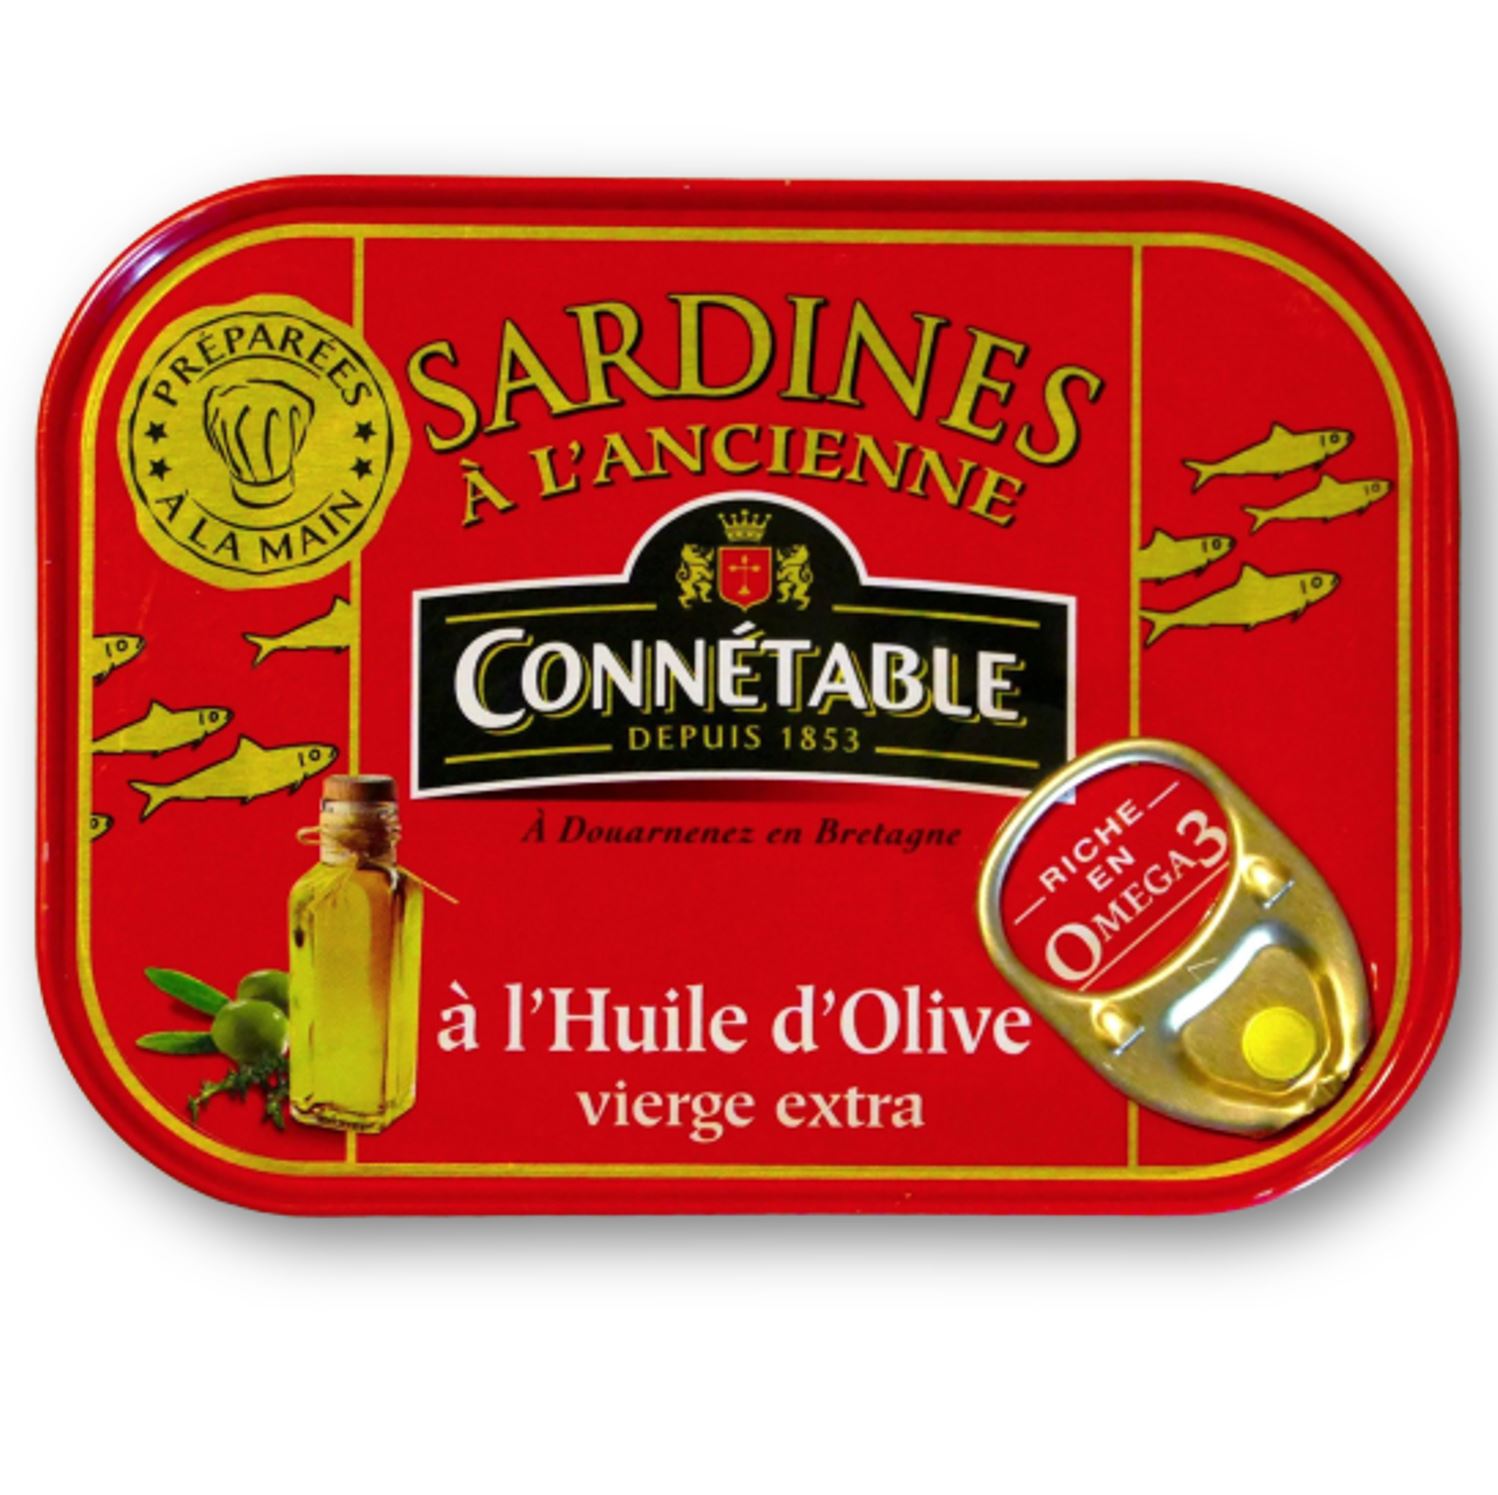 Sardines a l'huile d'olive 